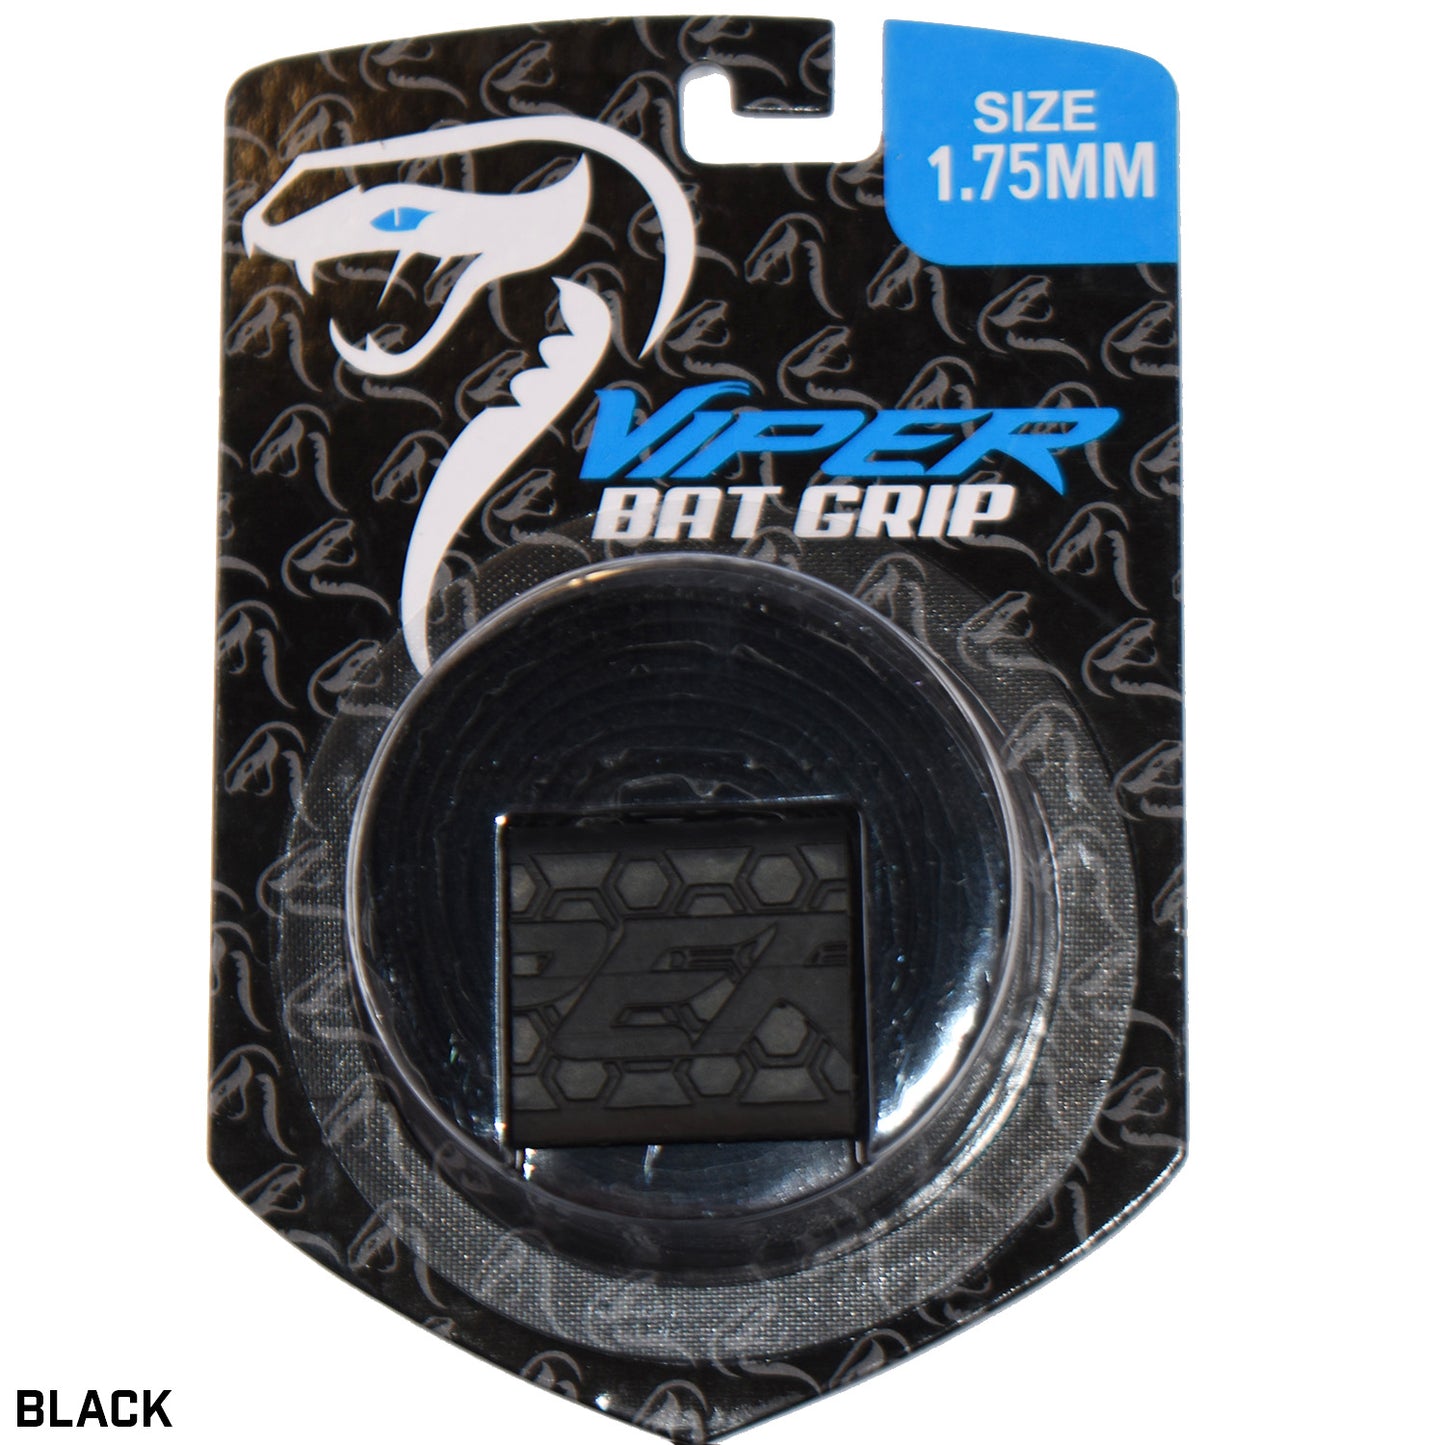 Viper Premium Performance Bat Grips